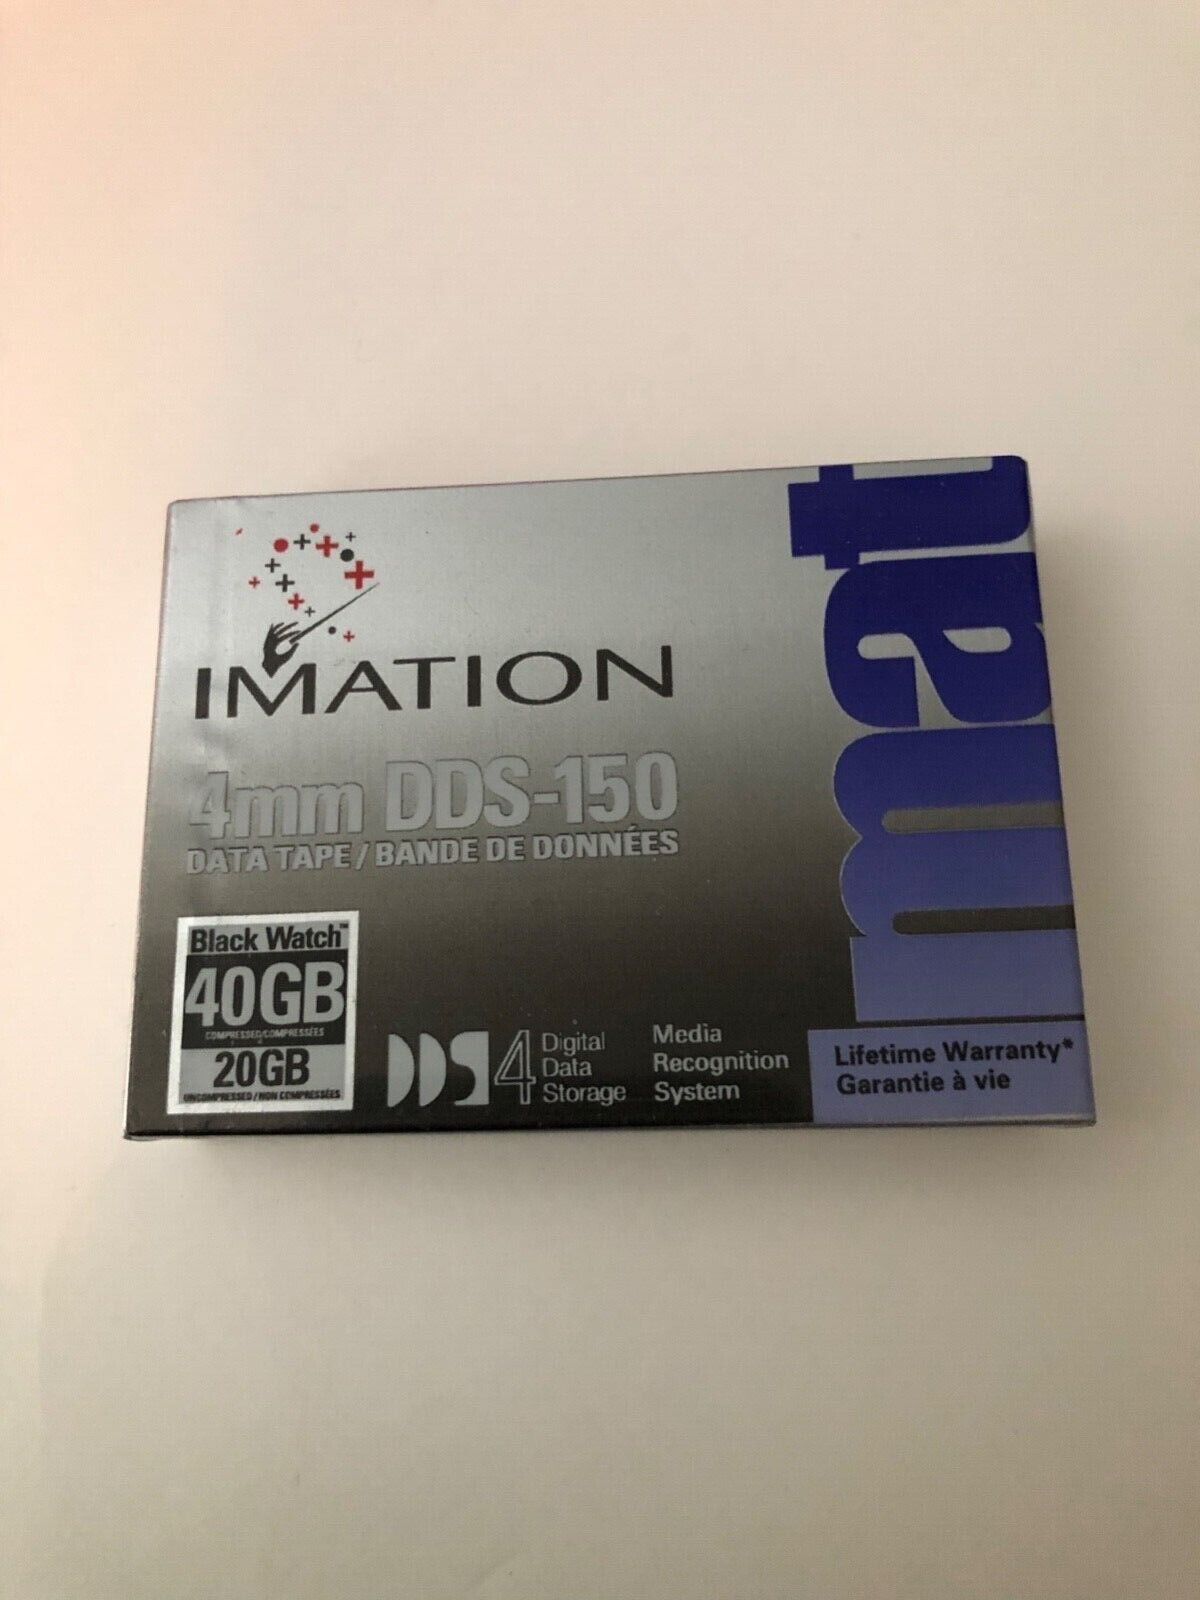 Imation 40GB Data Storage Tape 4mm DDS-150 Data Tape OEM Brand New Unopened